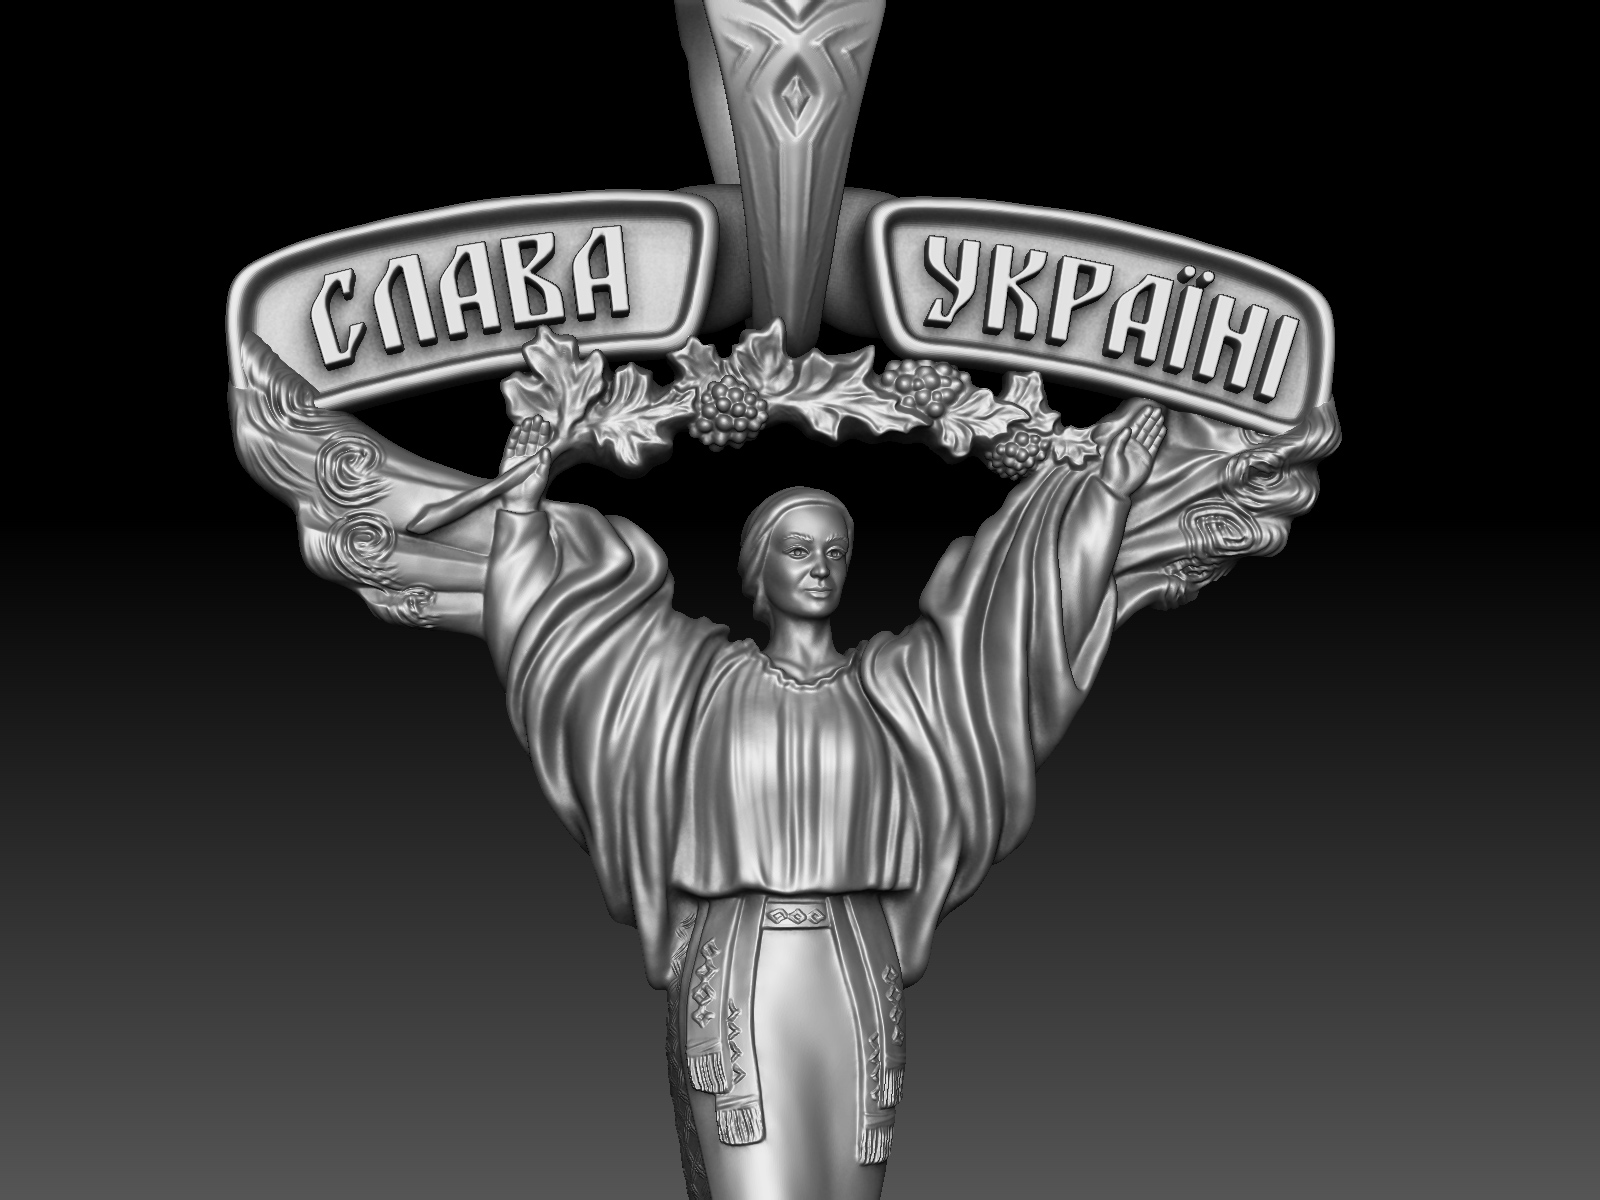 Custom-made symbolic pendant with Berehynia of Ukraine. Glory to Ukraine!